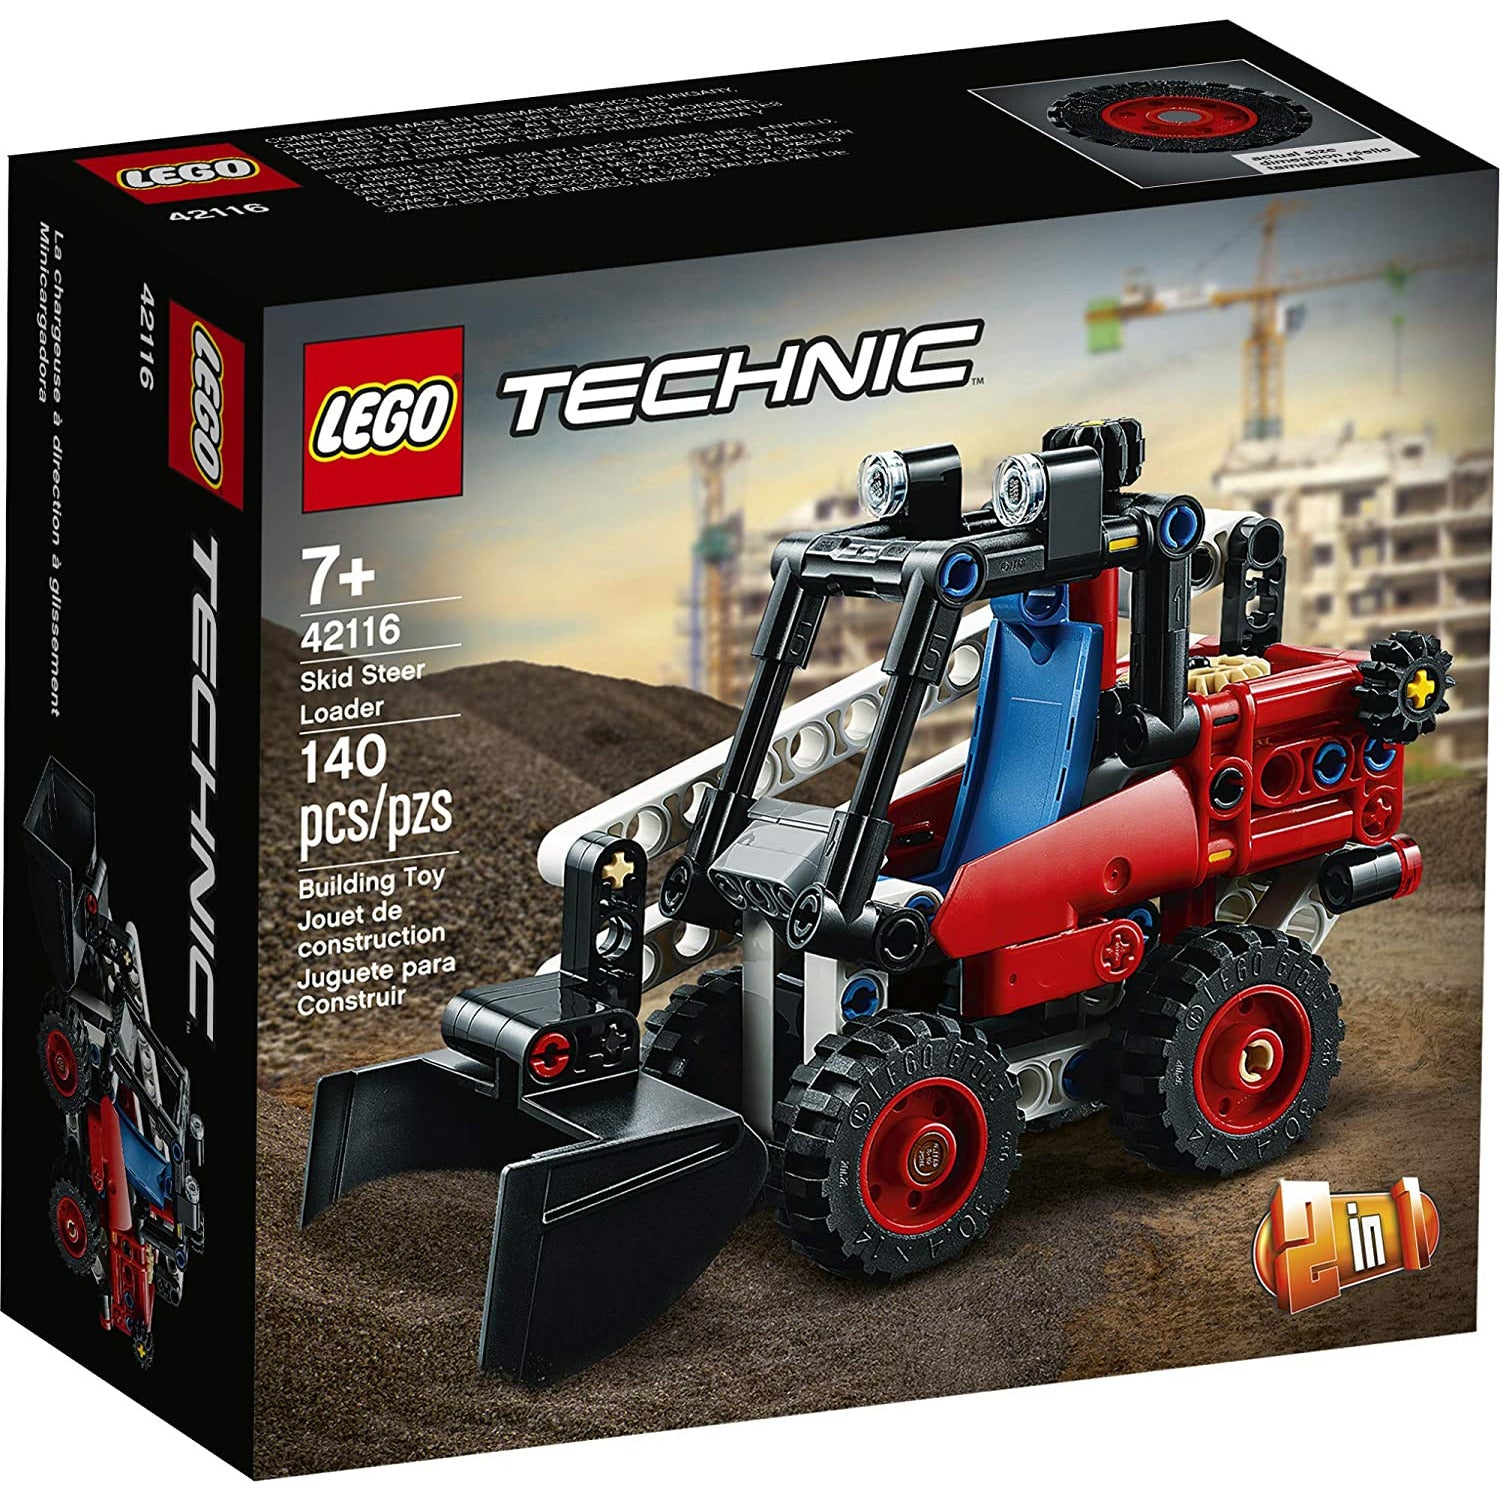 Lego Technic Skid Steer Loader Set 7Y+ - Peekaboo